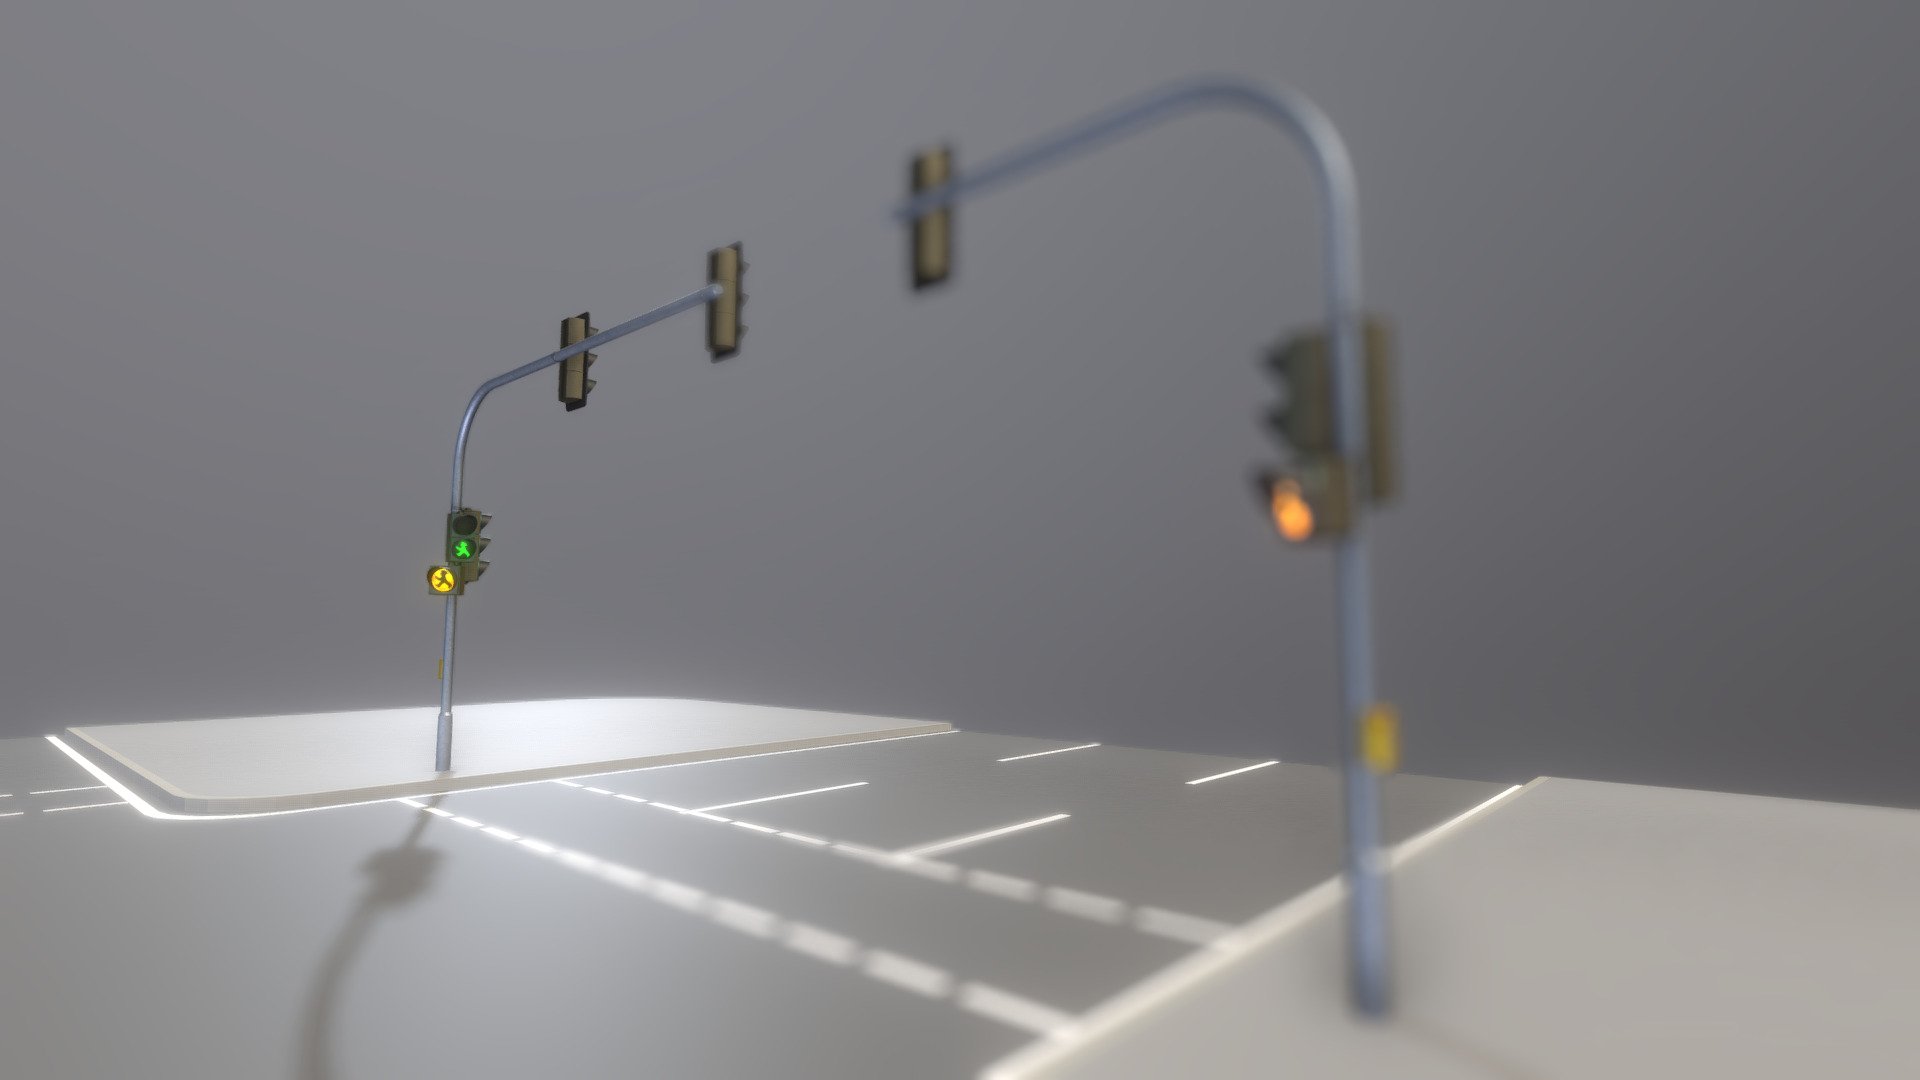 Ampelkreuzung dreispurig mit gelbem Warnlicht für Fußgänger.

 - Ampelkreuzung dreispurig mit gelbem Warnlicht - Buy Royalty Free 3D model by VIS-All-3D (@VIS-All) 3d model